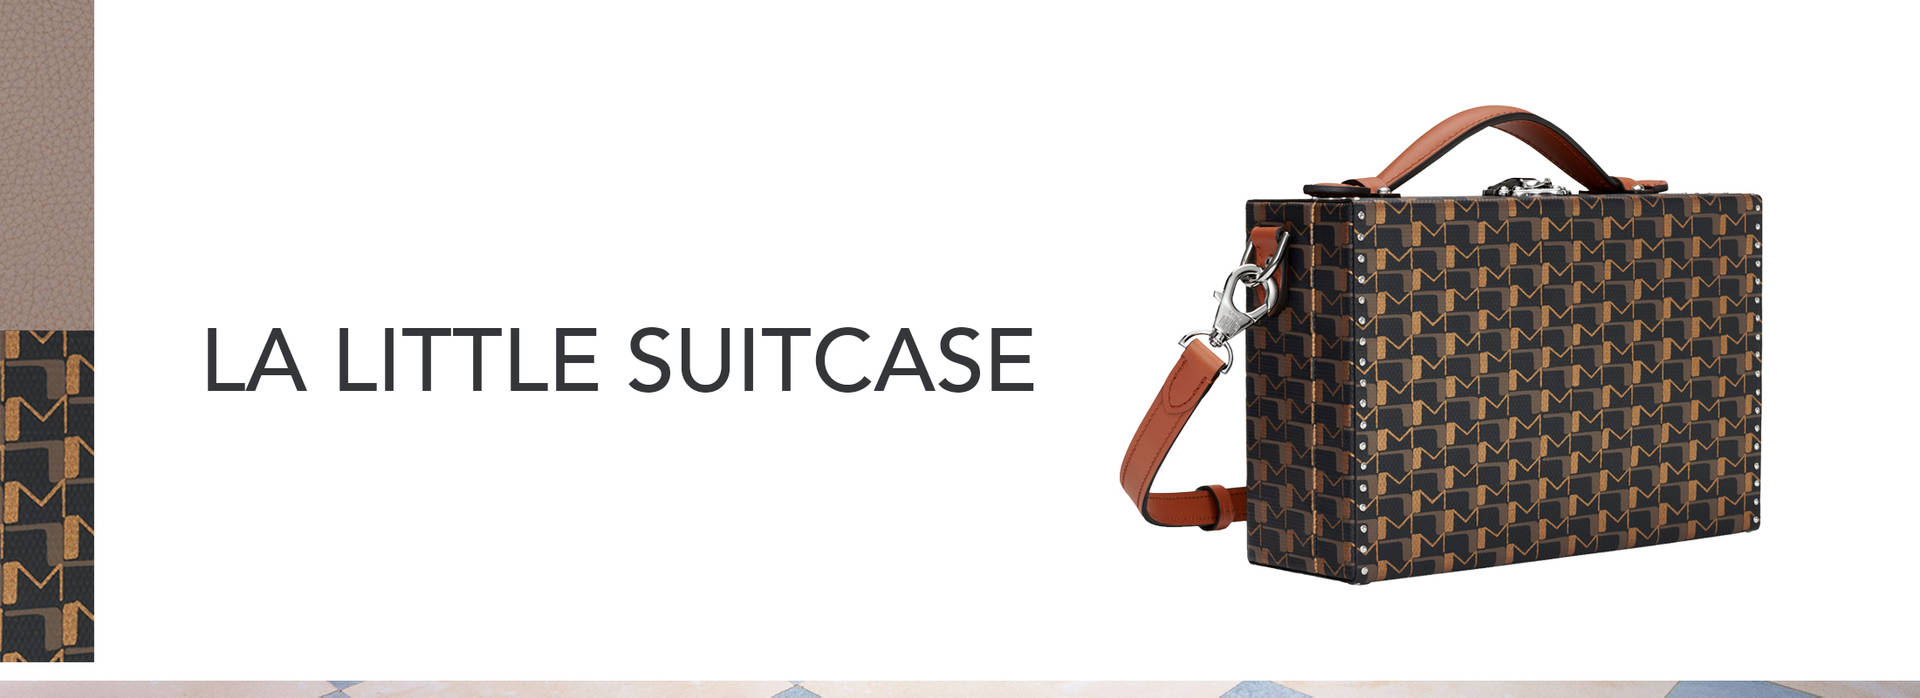 Little Suitcase By Moynat Wallpaper